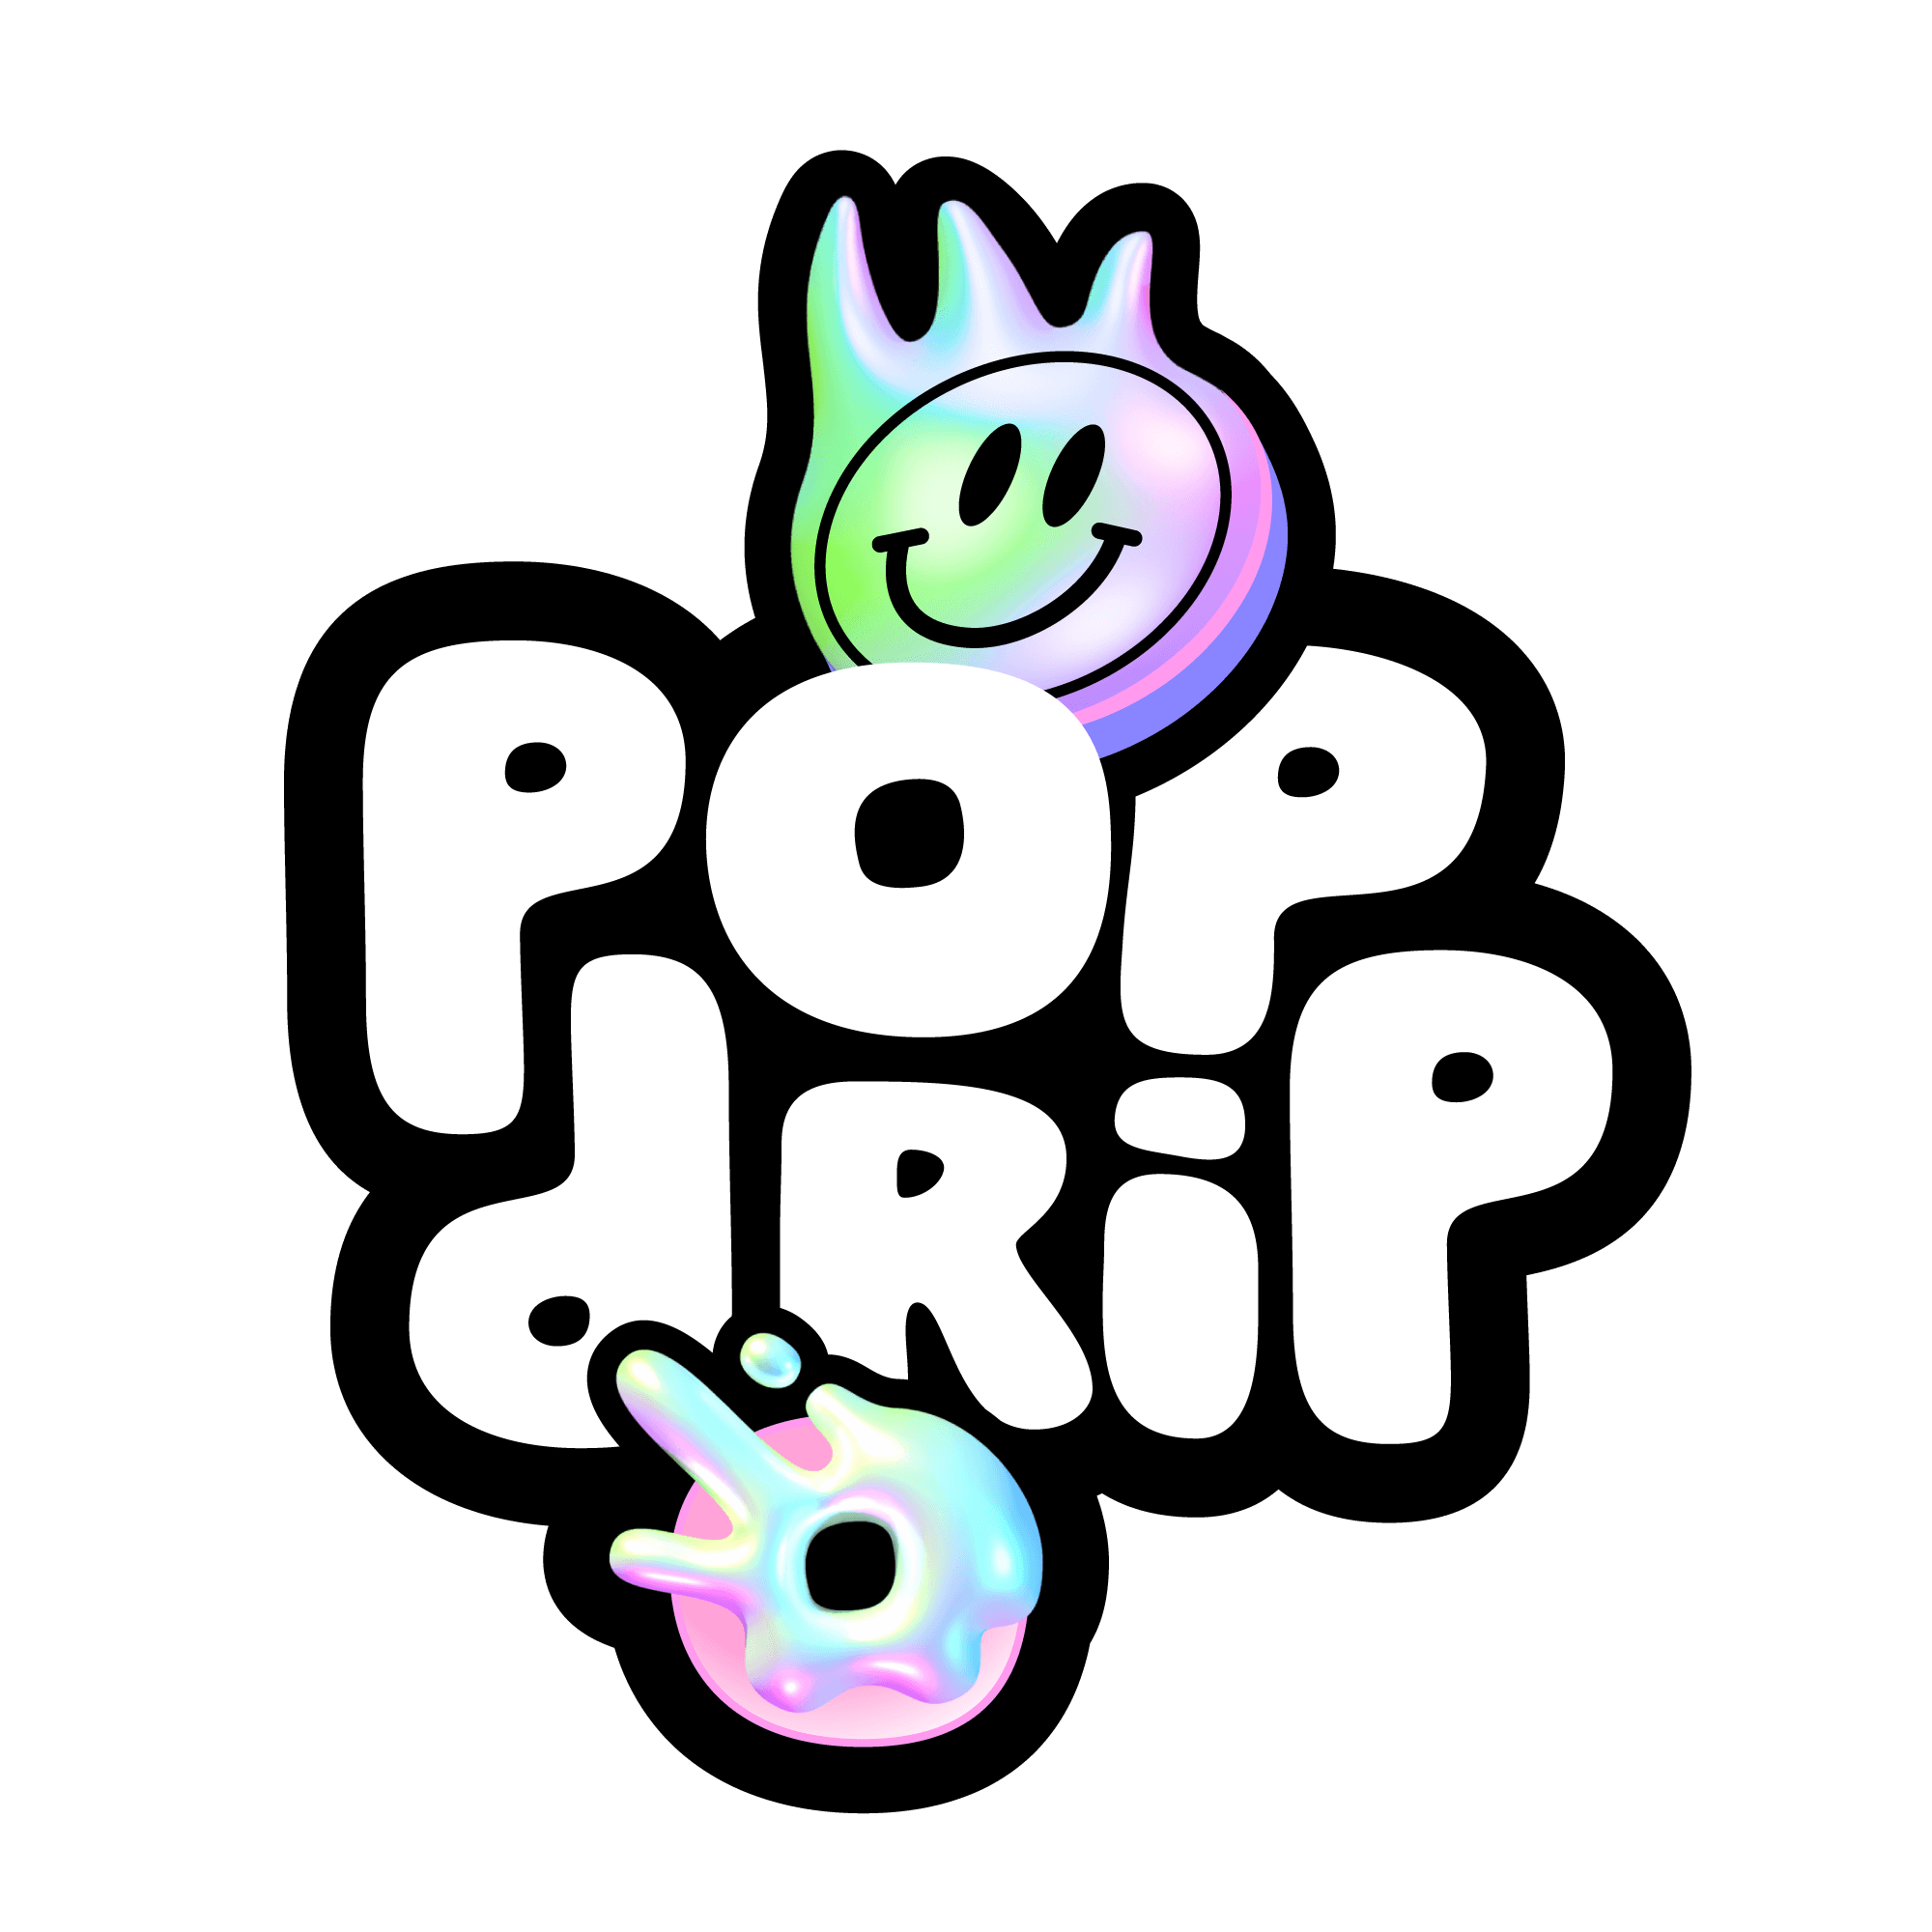 Popdrip